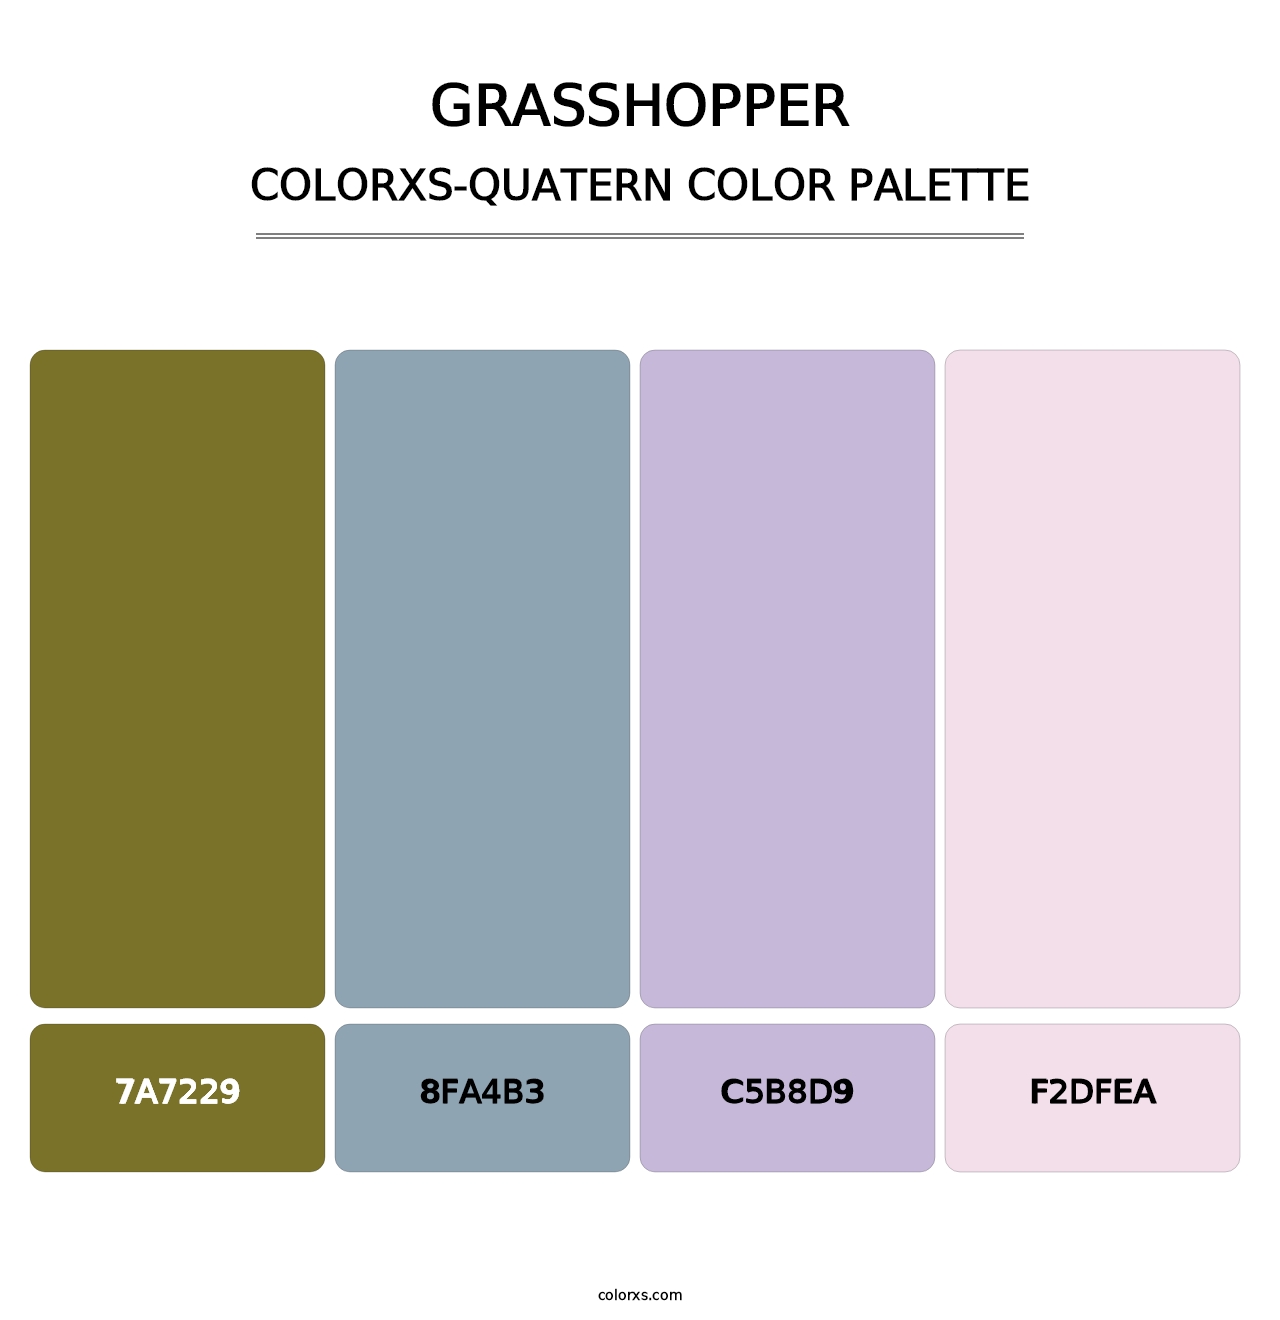 Grasshopper - Colorxs Quatern Palette